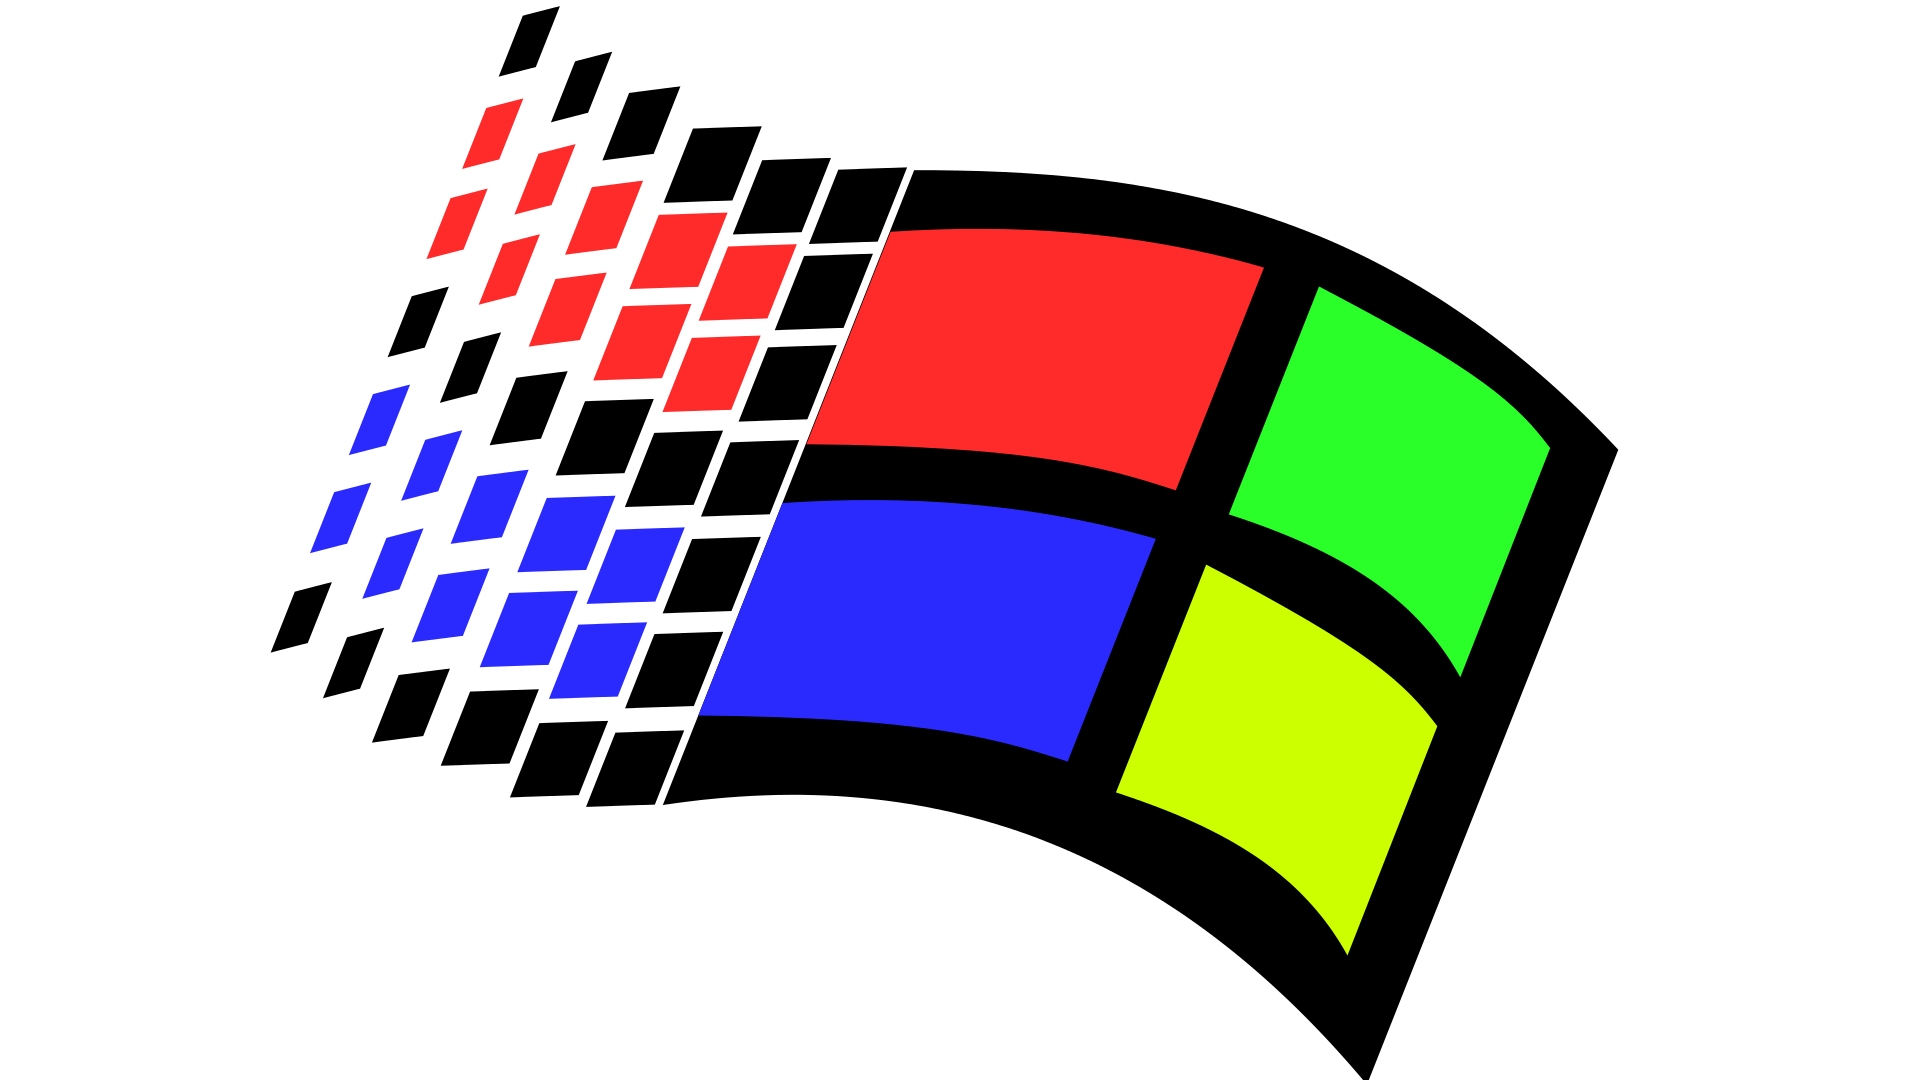 Windows 95 Logo